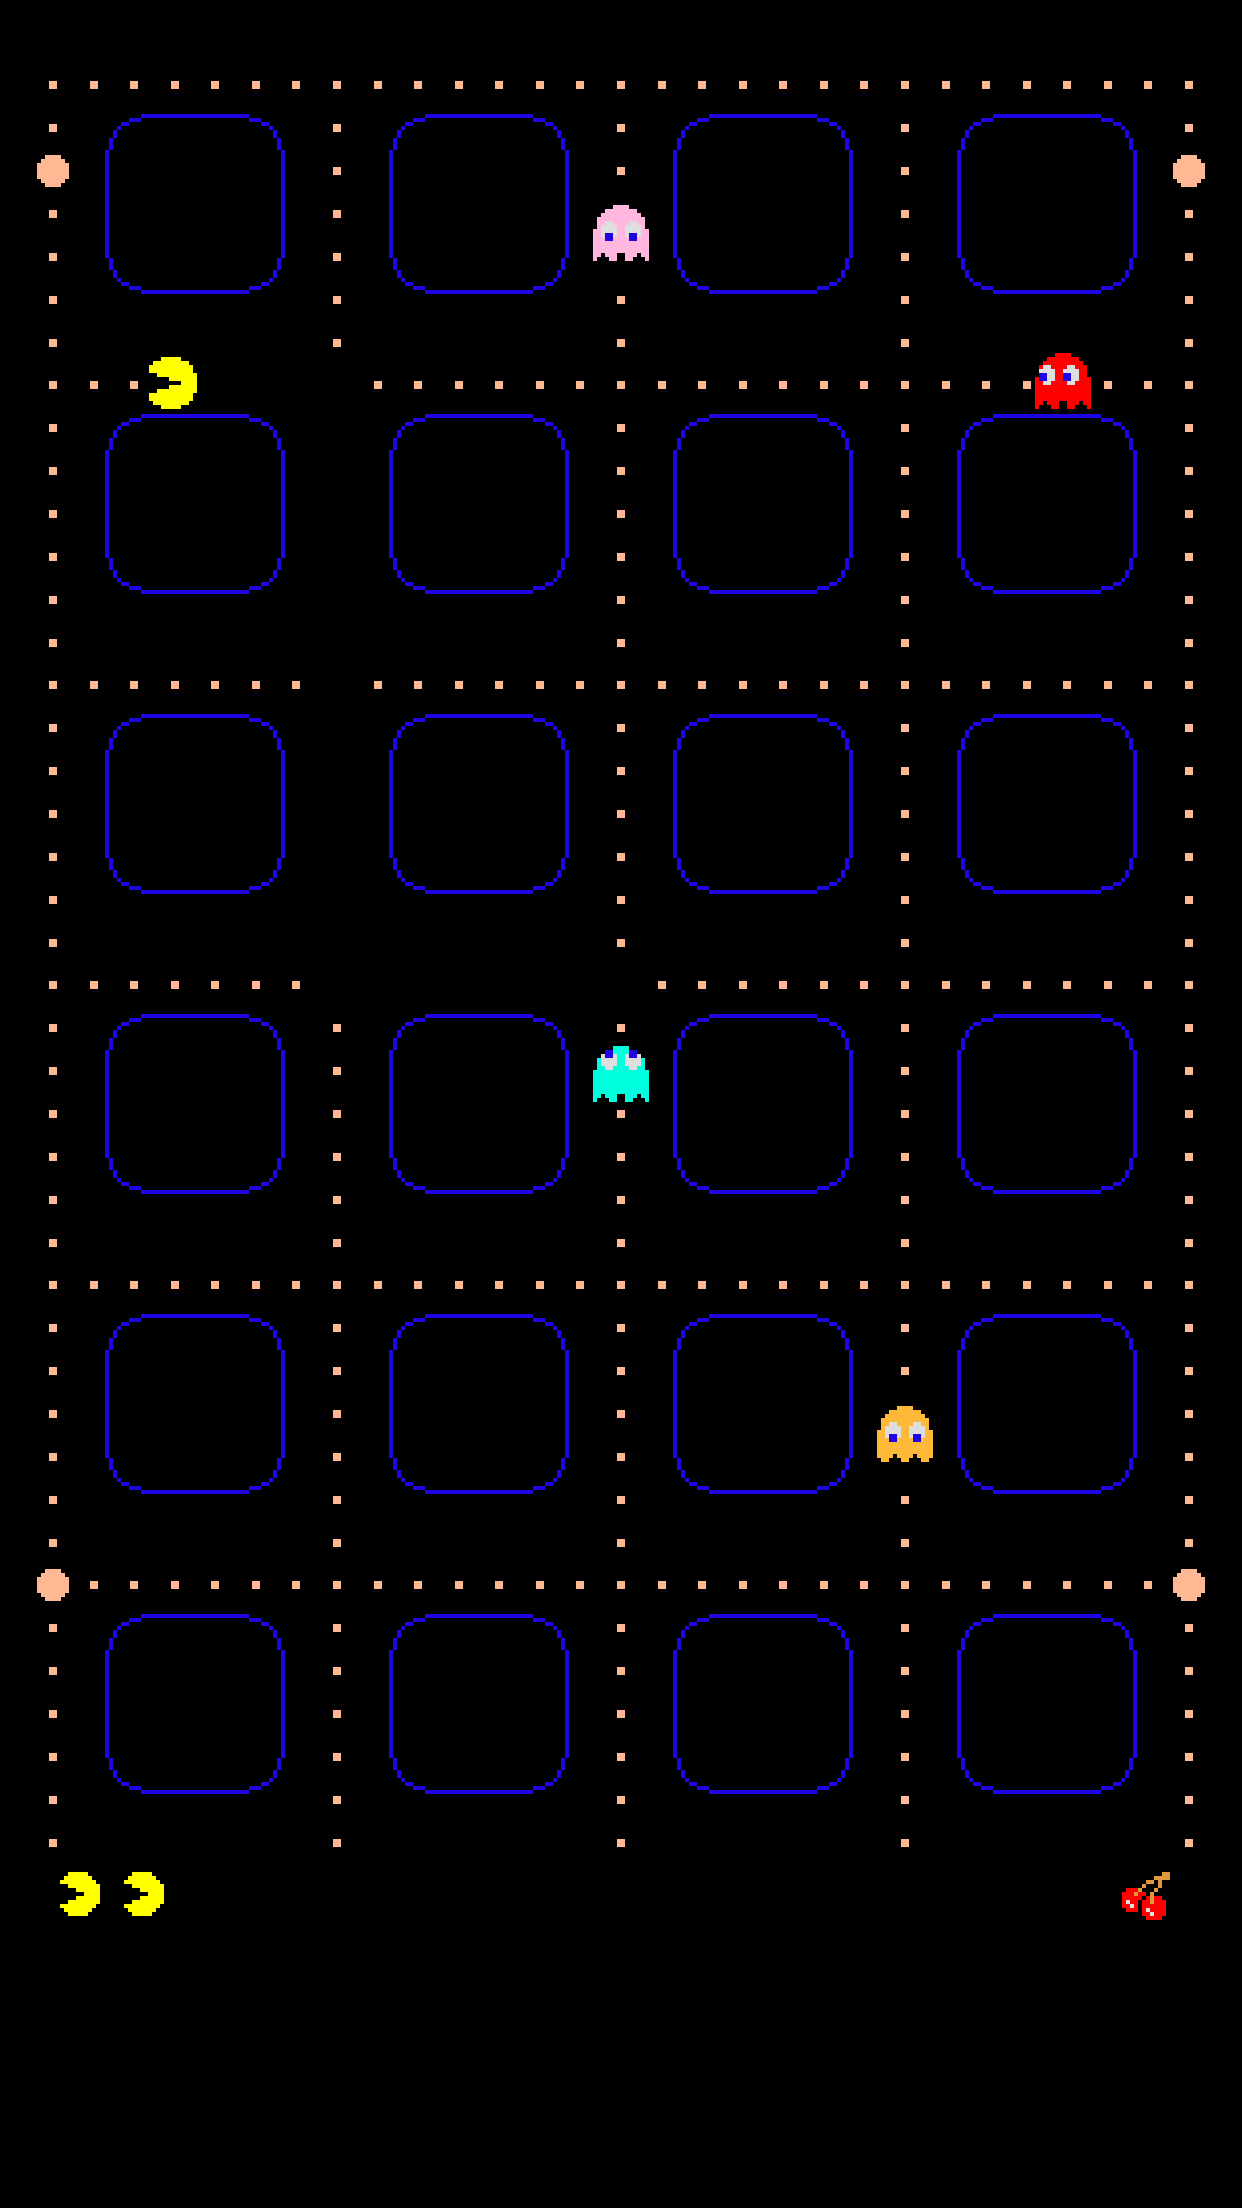 Pac Man Phone Wallpapers